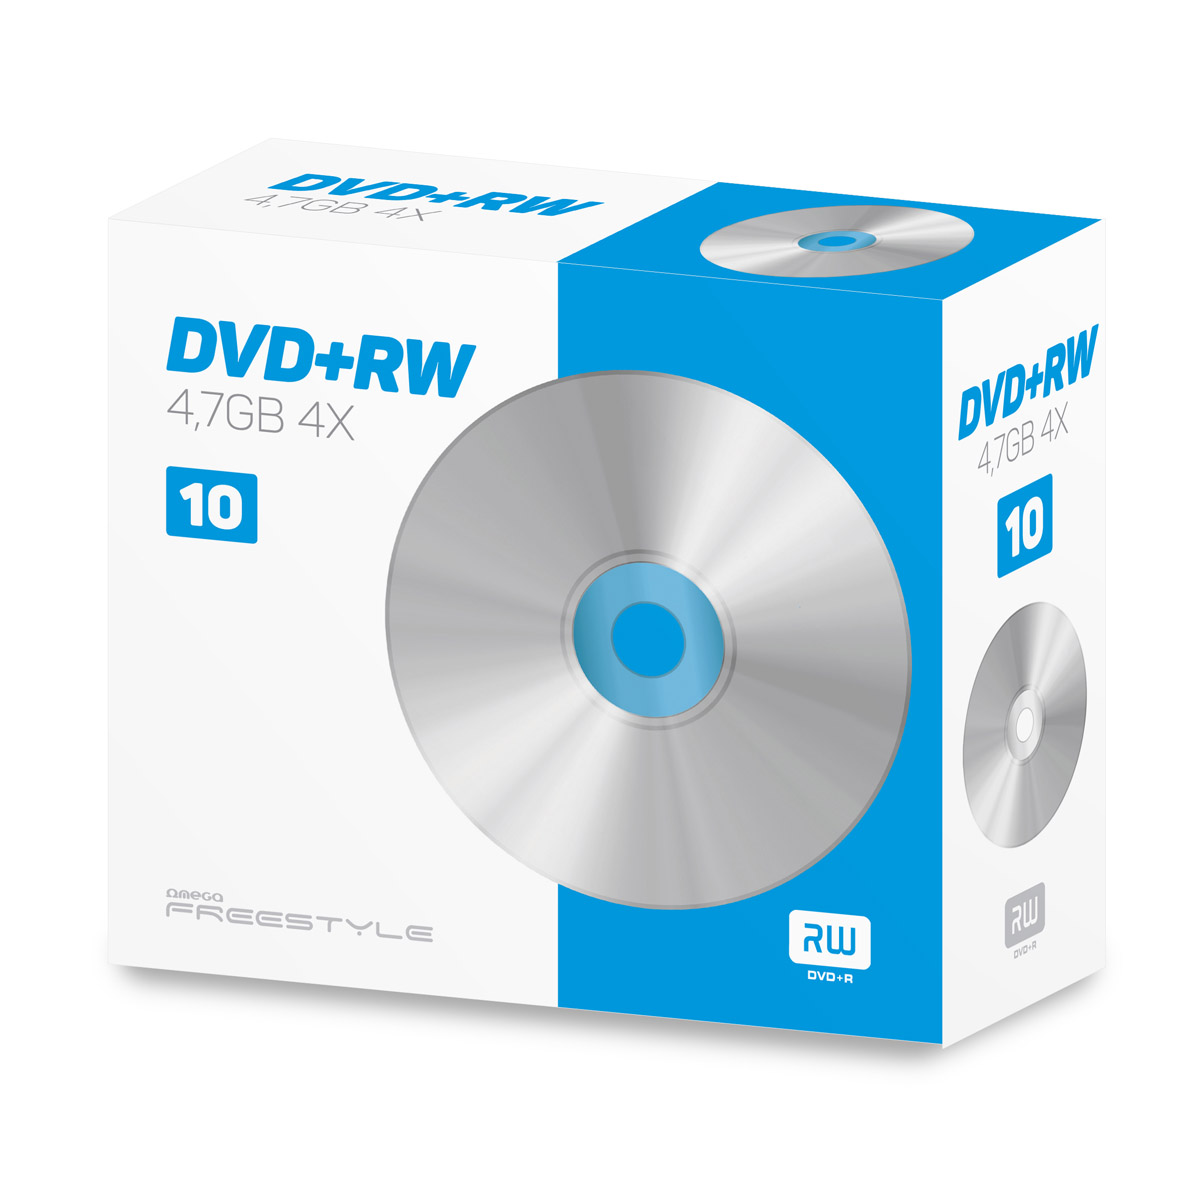 DVD+RW 4.7GB 4X OMEGA SLIM CASE*10 OMDFRW4S+ 56705